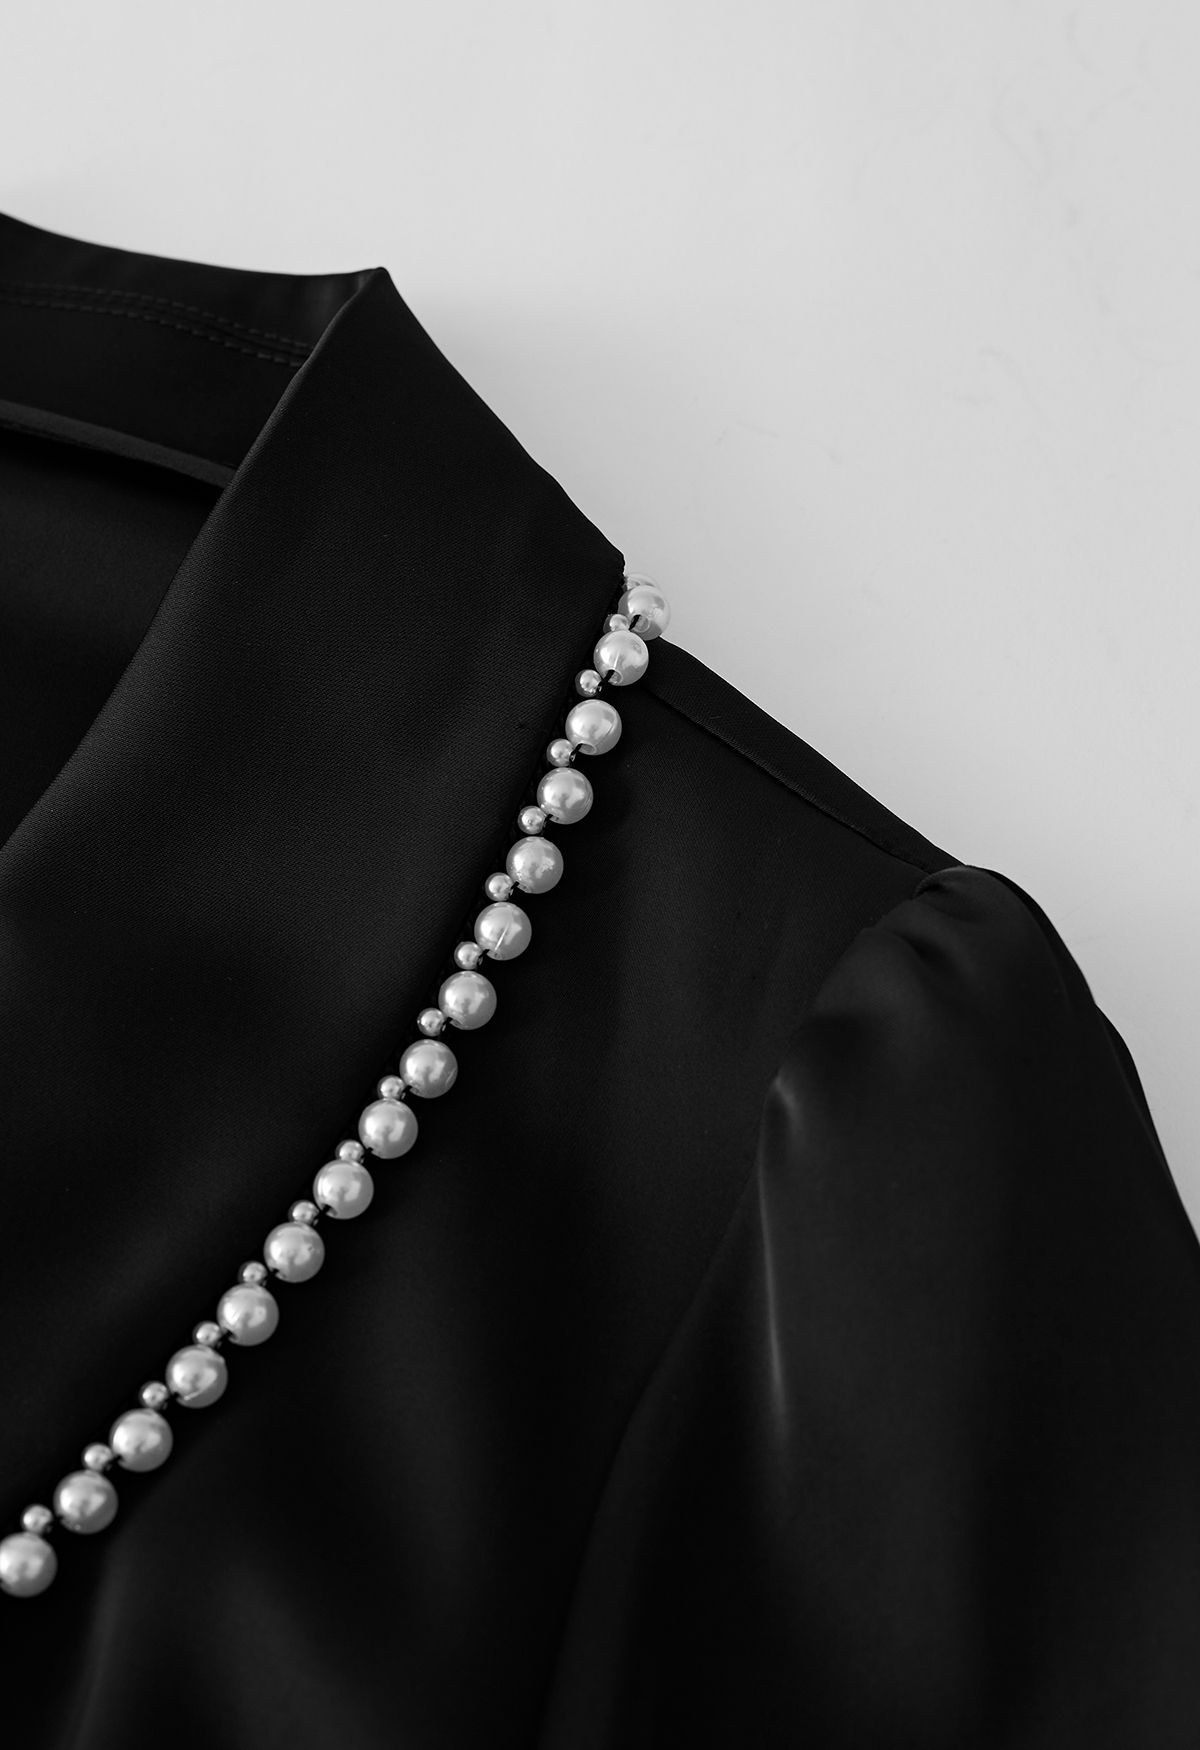 Robe mi-longue en satin enveloppée de perles en noir